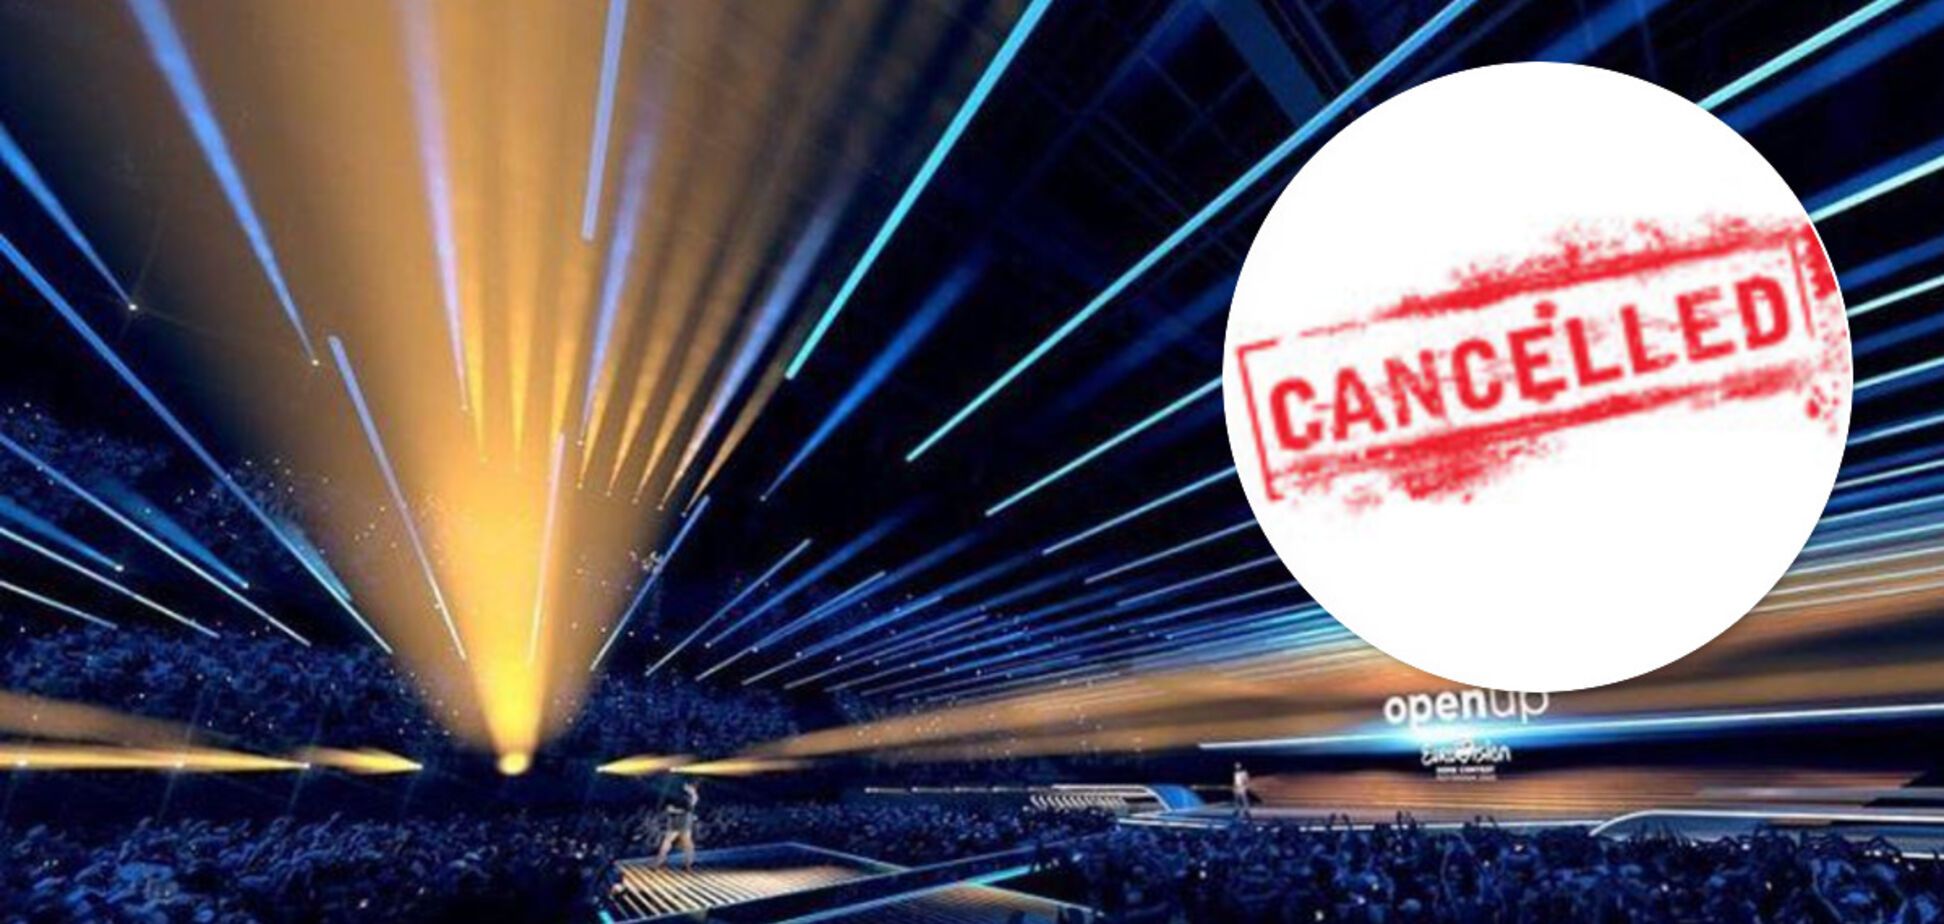 Евровидение-2020 в Роттердаме отменили из-за коронавируса – СМИ